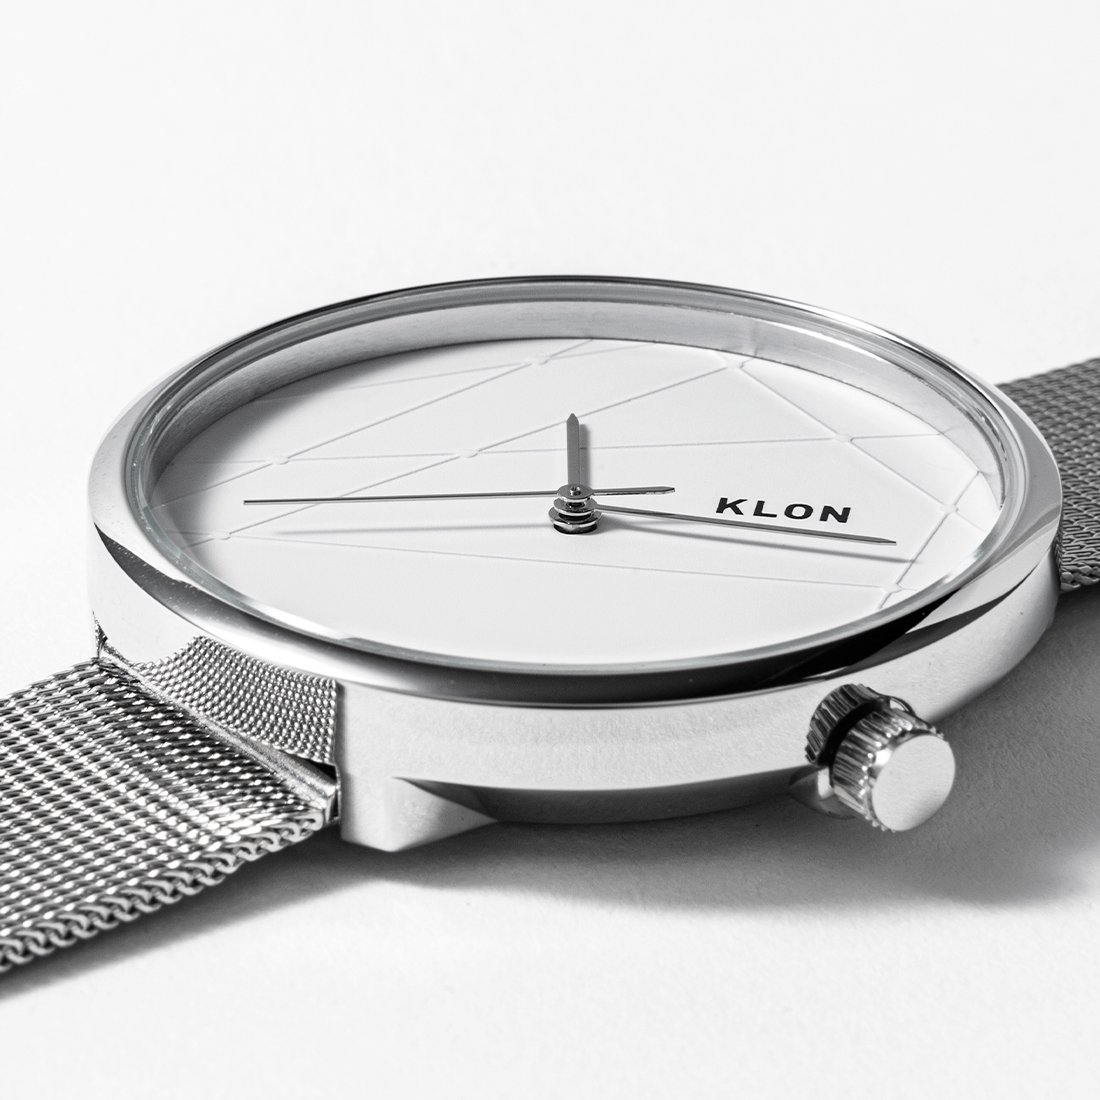 KLON INTERSECT TIME -SILVER MESH- 38mm カジュアル 腕時計